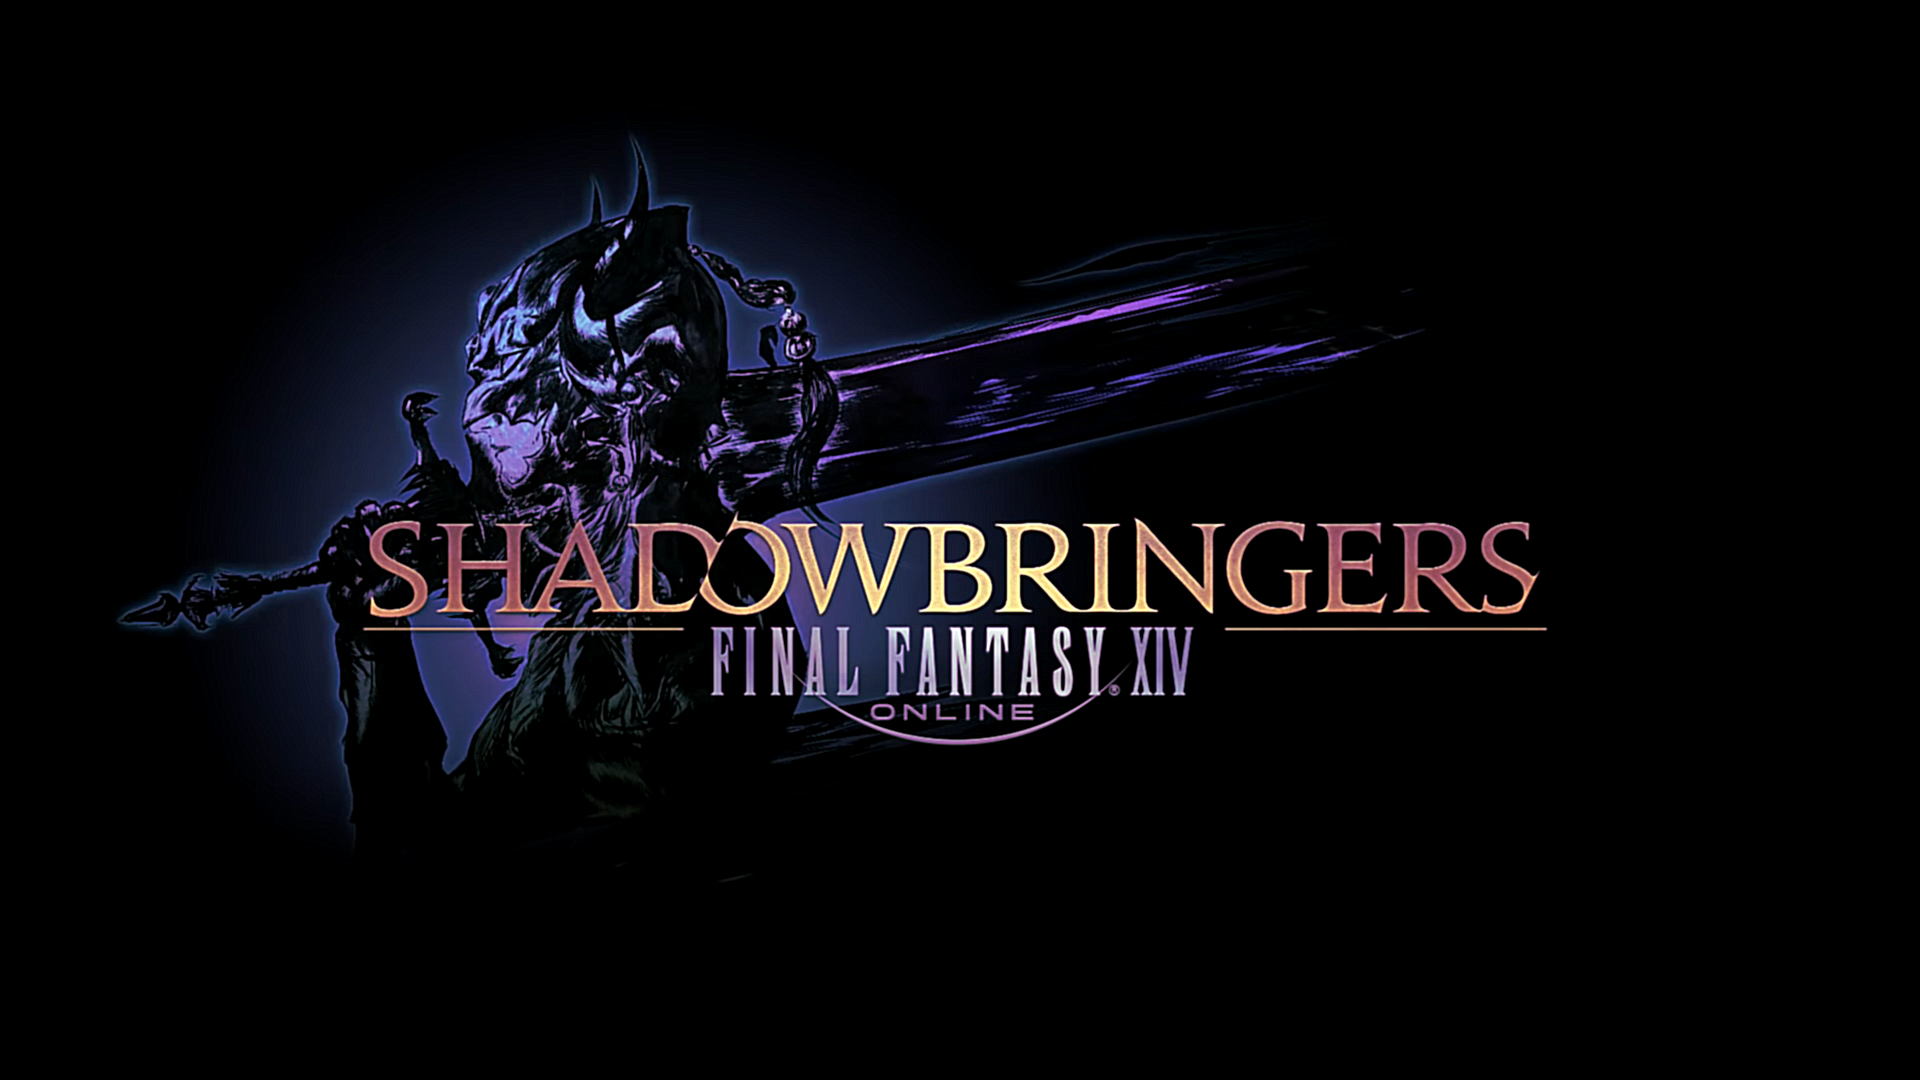 Final Fantasy XIV: Shadowbringers Preview